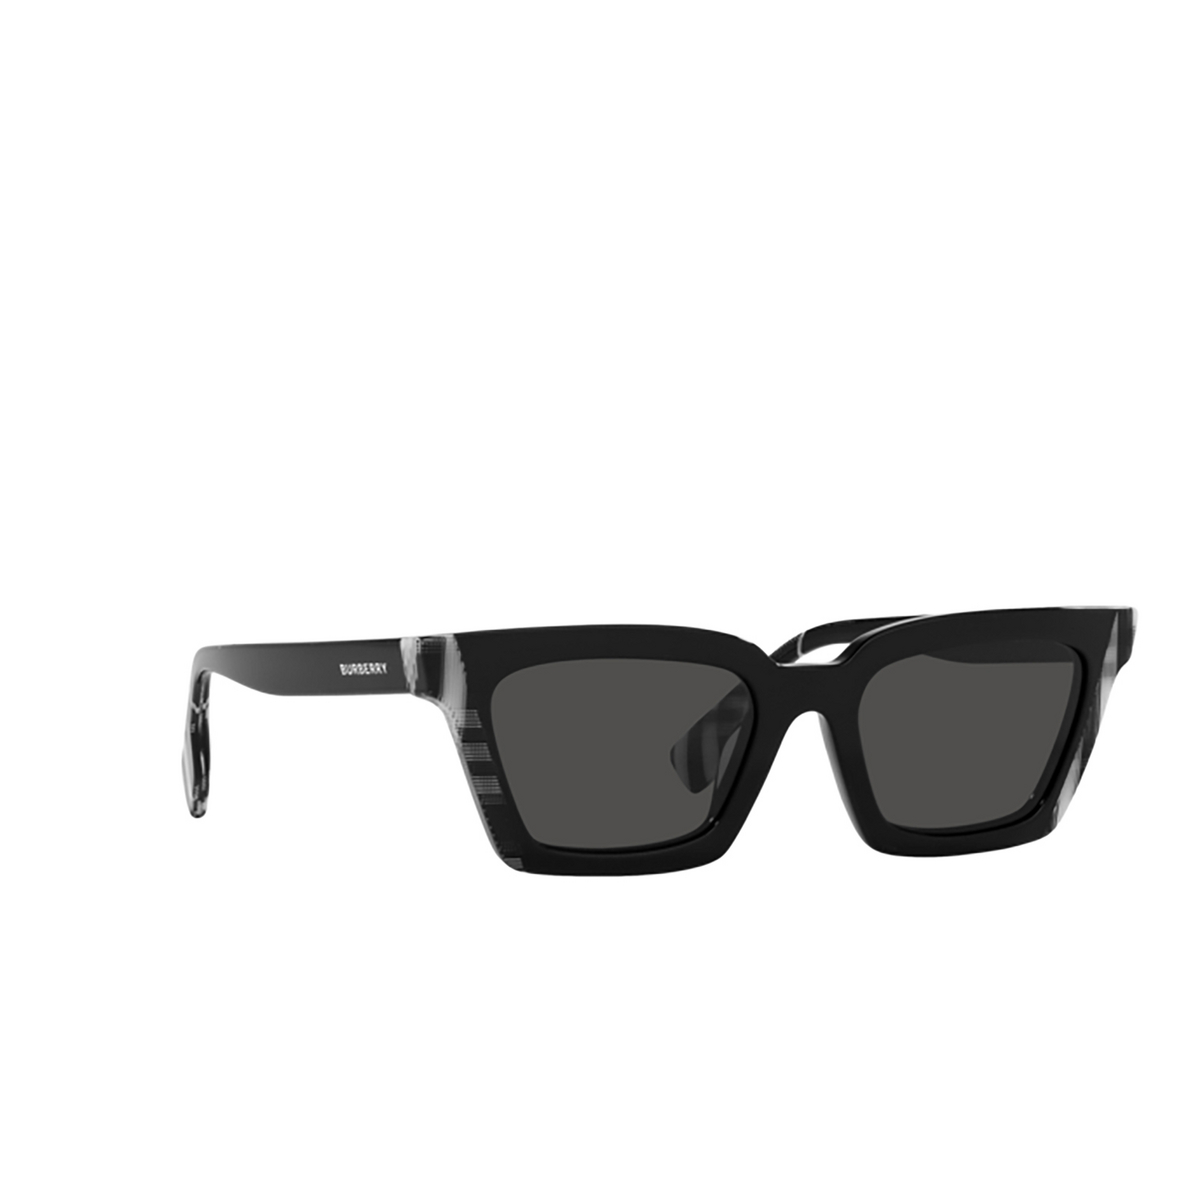 Burberry BRIAR Sunglasses 405187 Black / Check White Black - three-quarters view